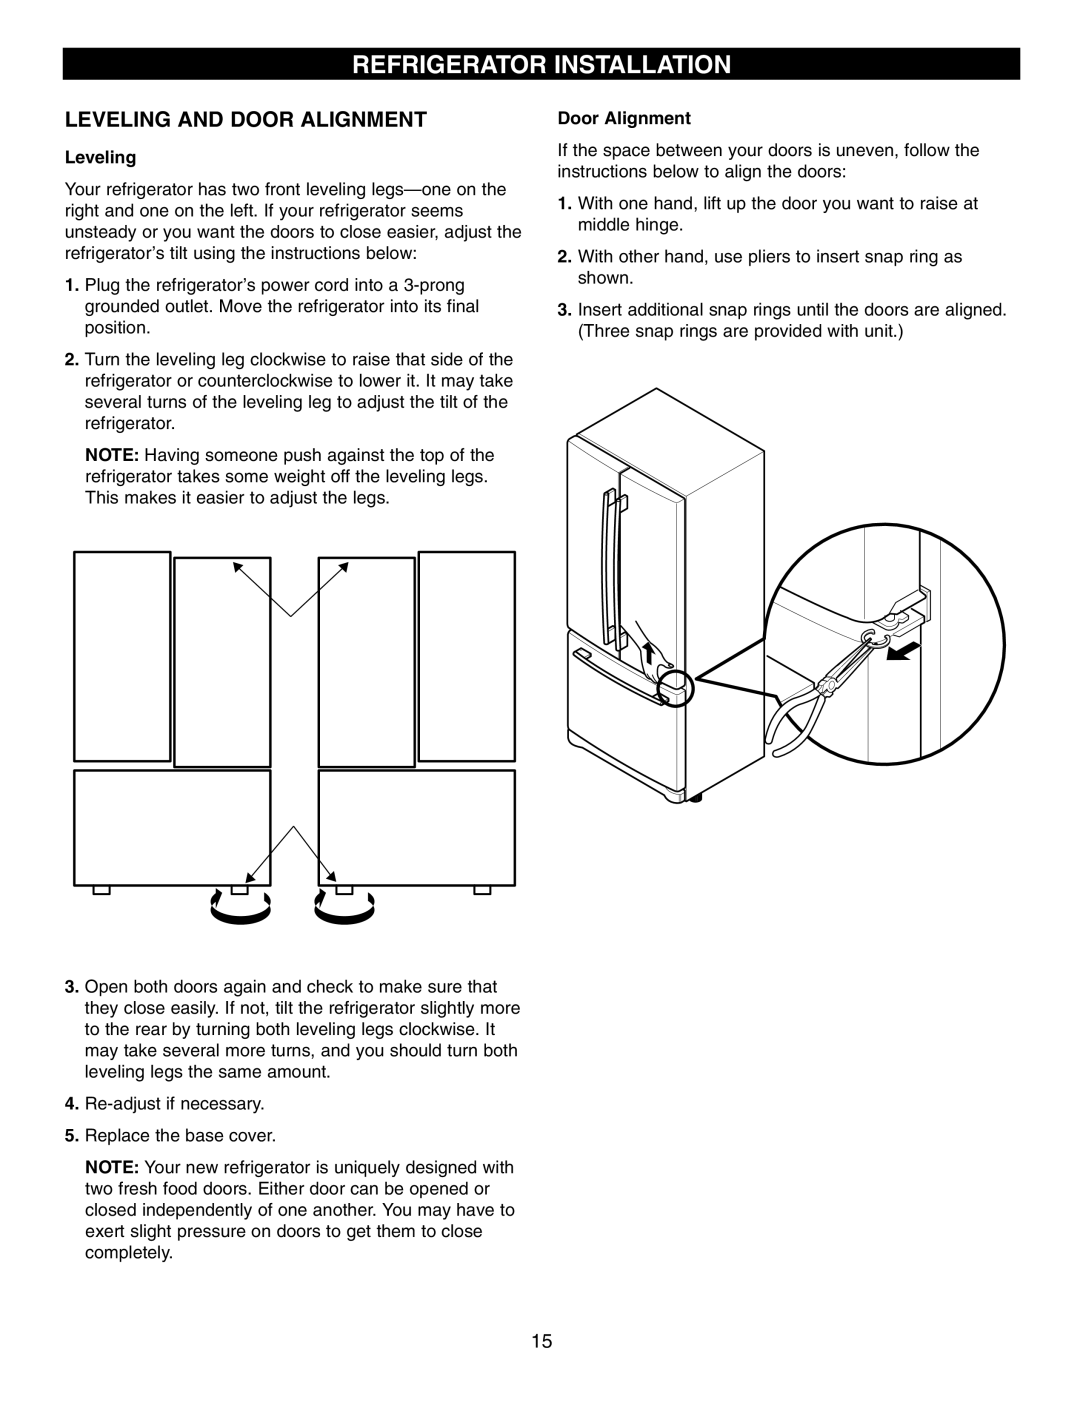 LG Electronics LFC25760 manual Refrigerator Installation, Leveling And Door Alignment 